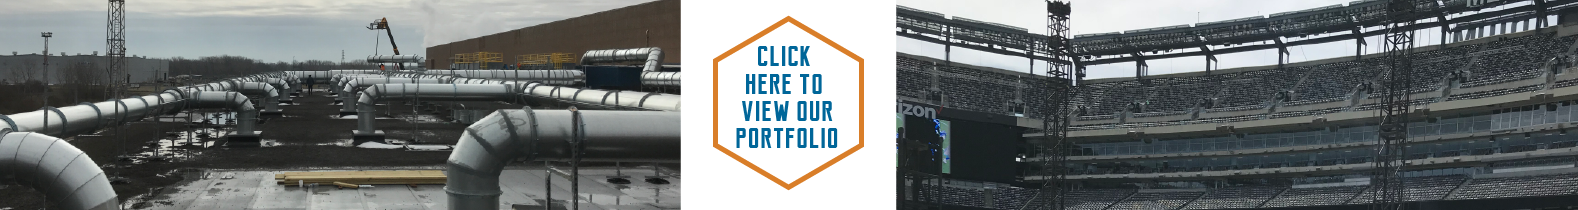 Click here to view our portfolio